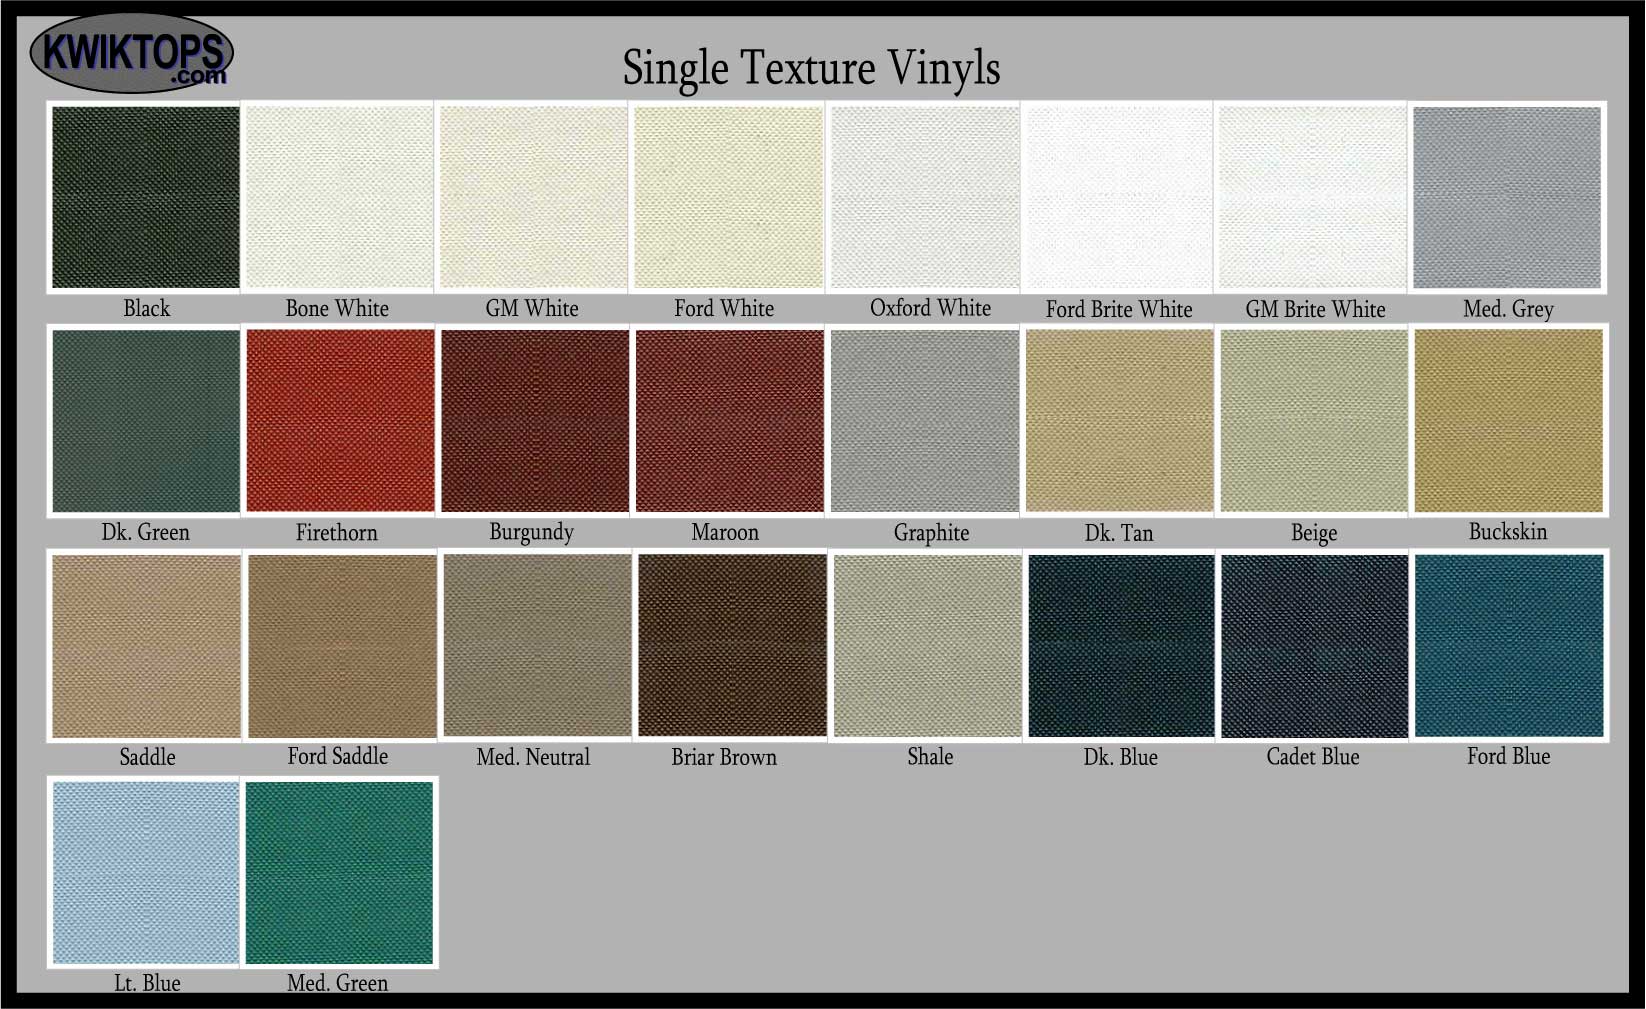 Ez-On Single Texture Vinyl Top Material